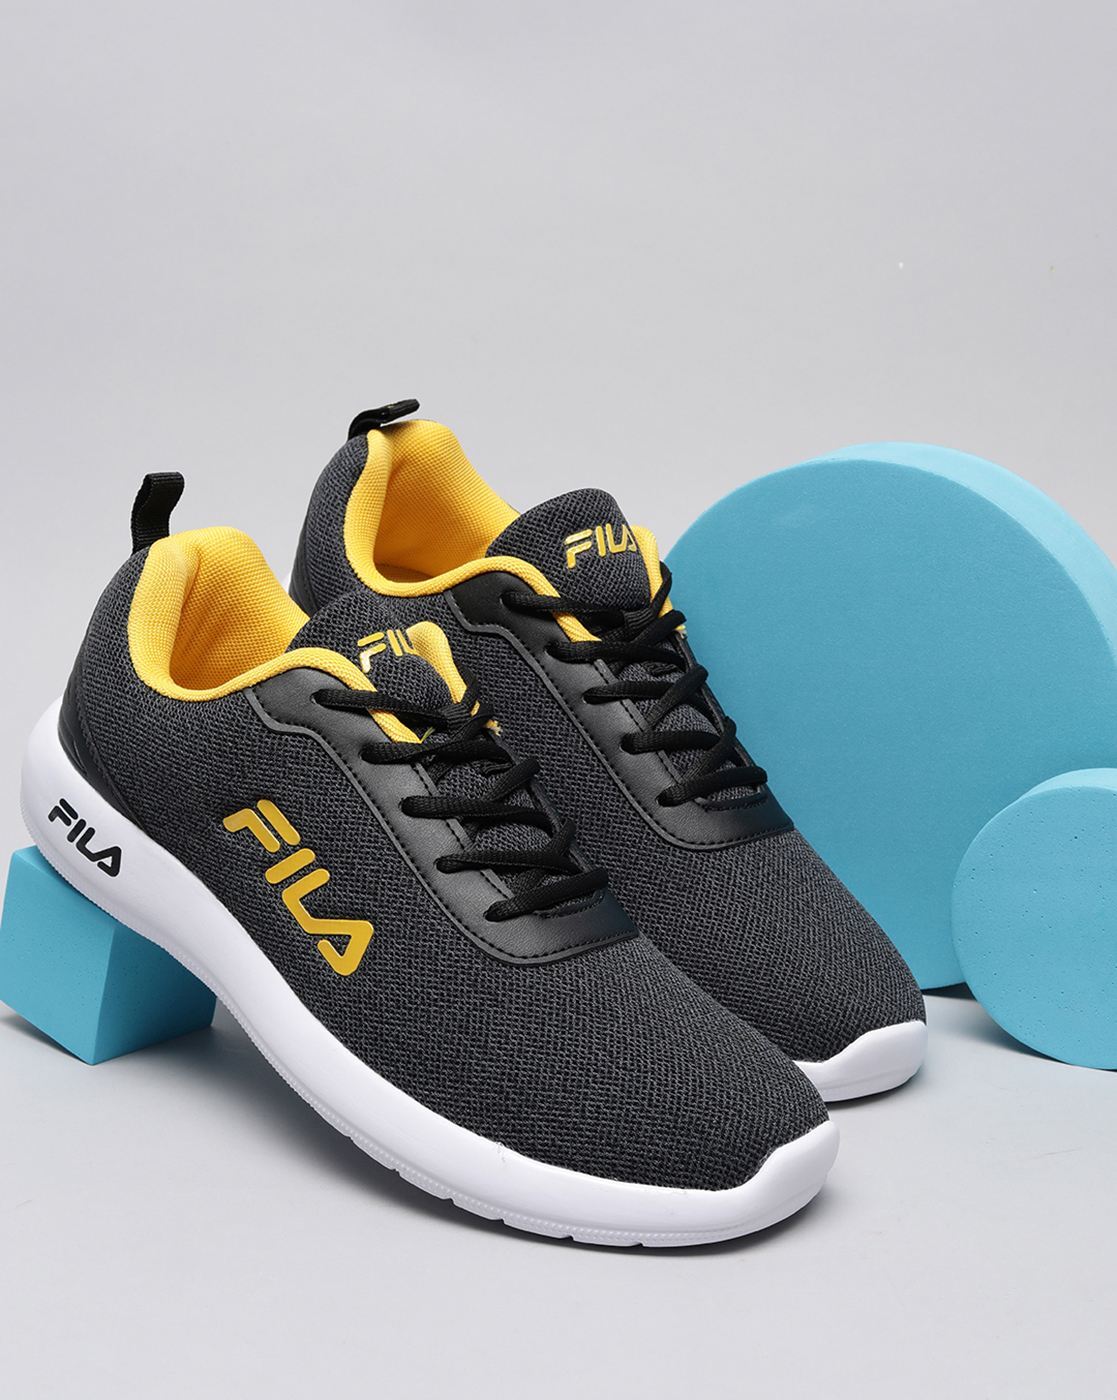 Fila | Shoes | Fila Sneakers Men Size 85 Black Athletic Shoes Lace Up Low  Top | Poshmark